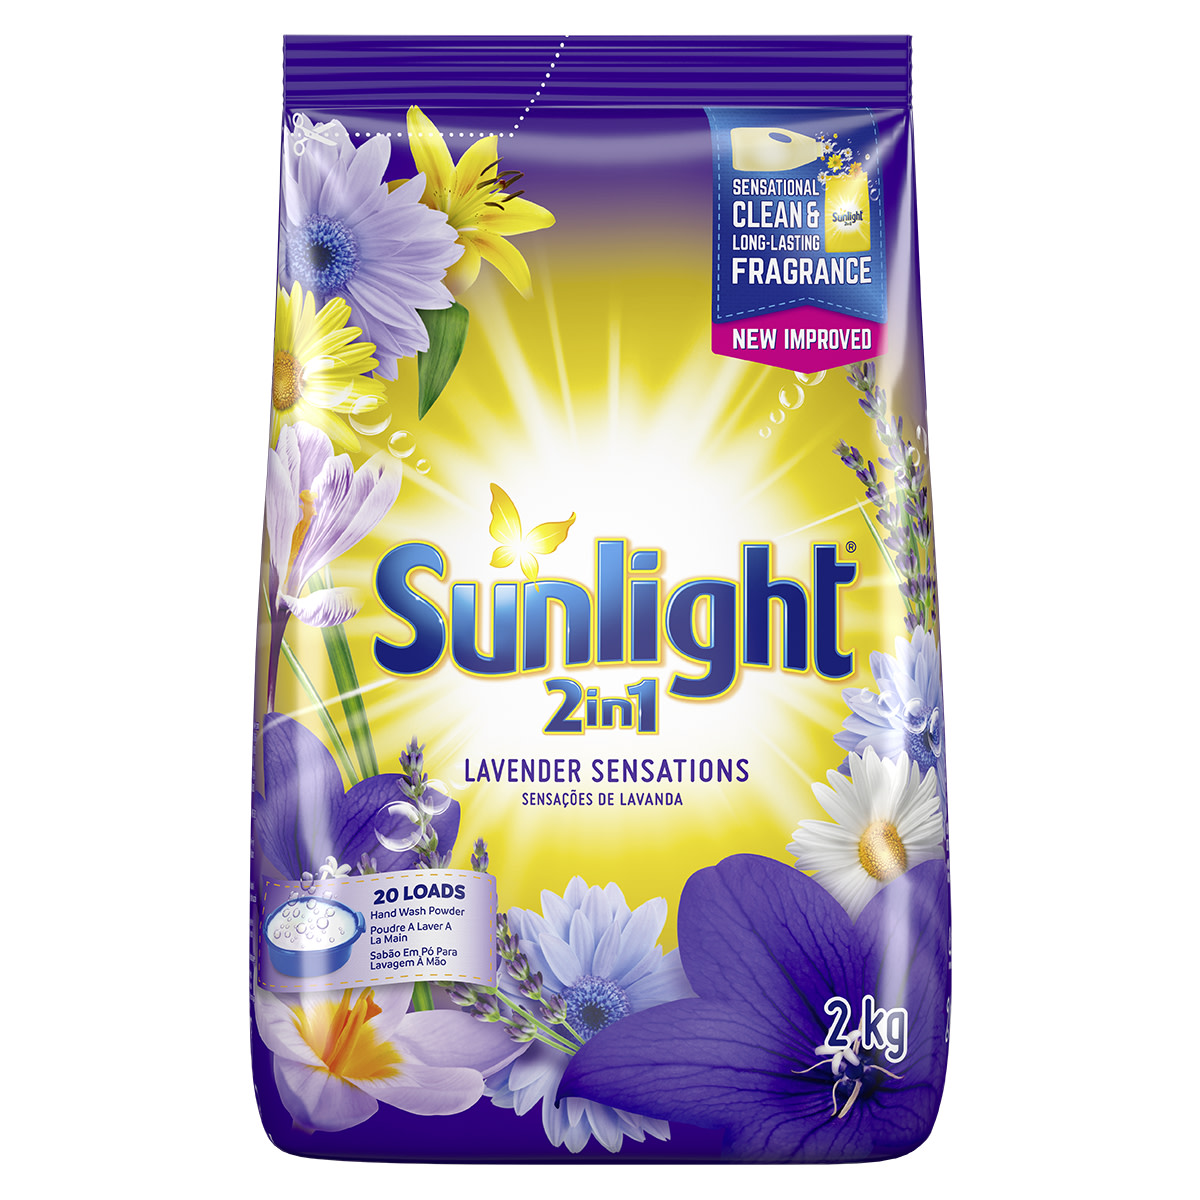 Sunlight 2in1 Lavender Fragrance Handwash Washing Powder